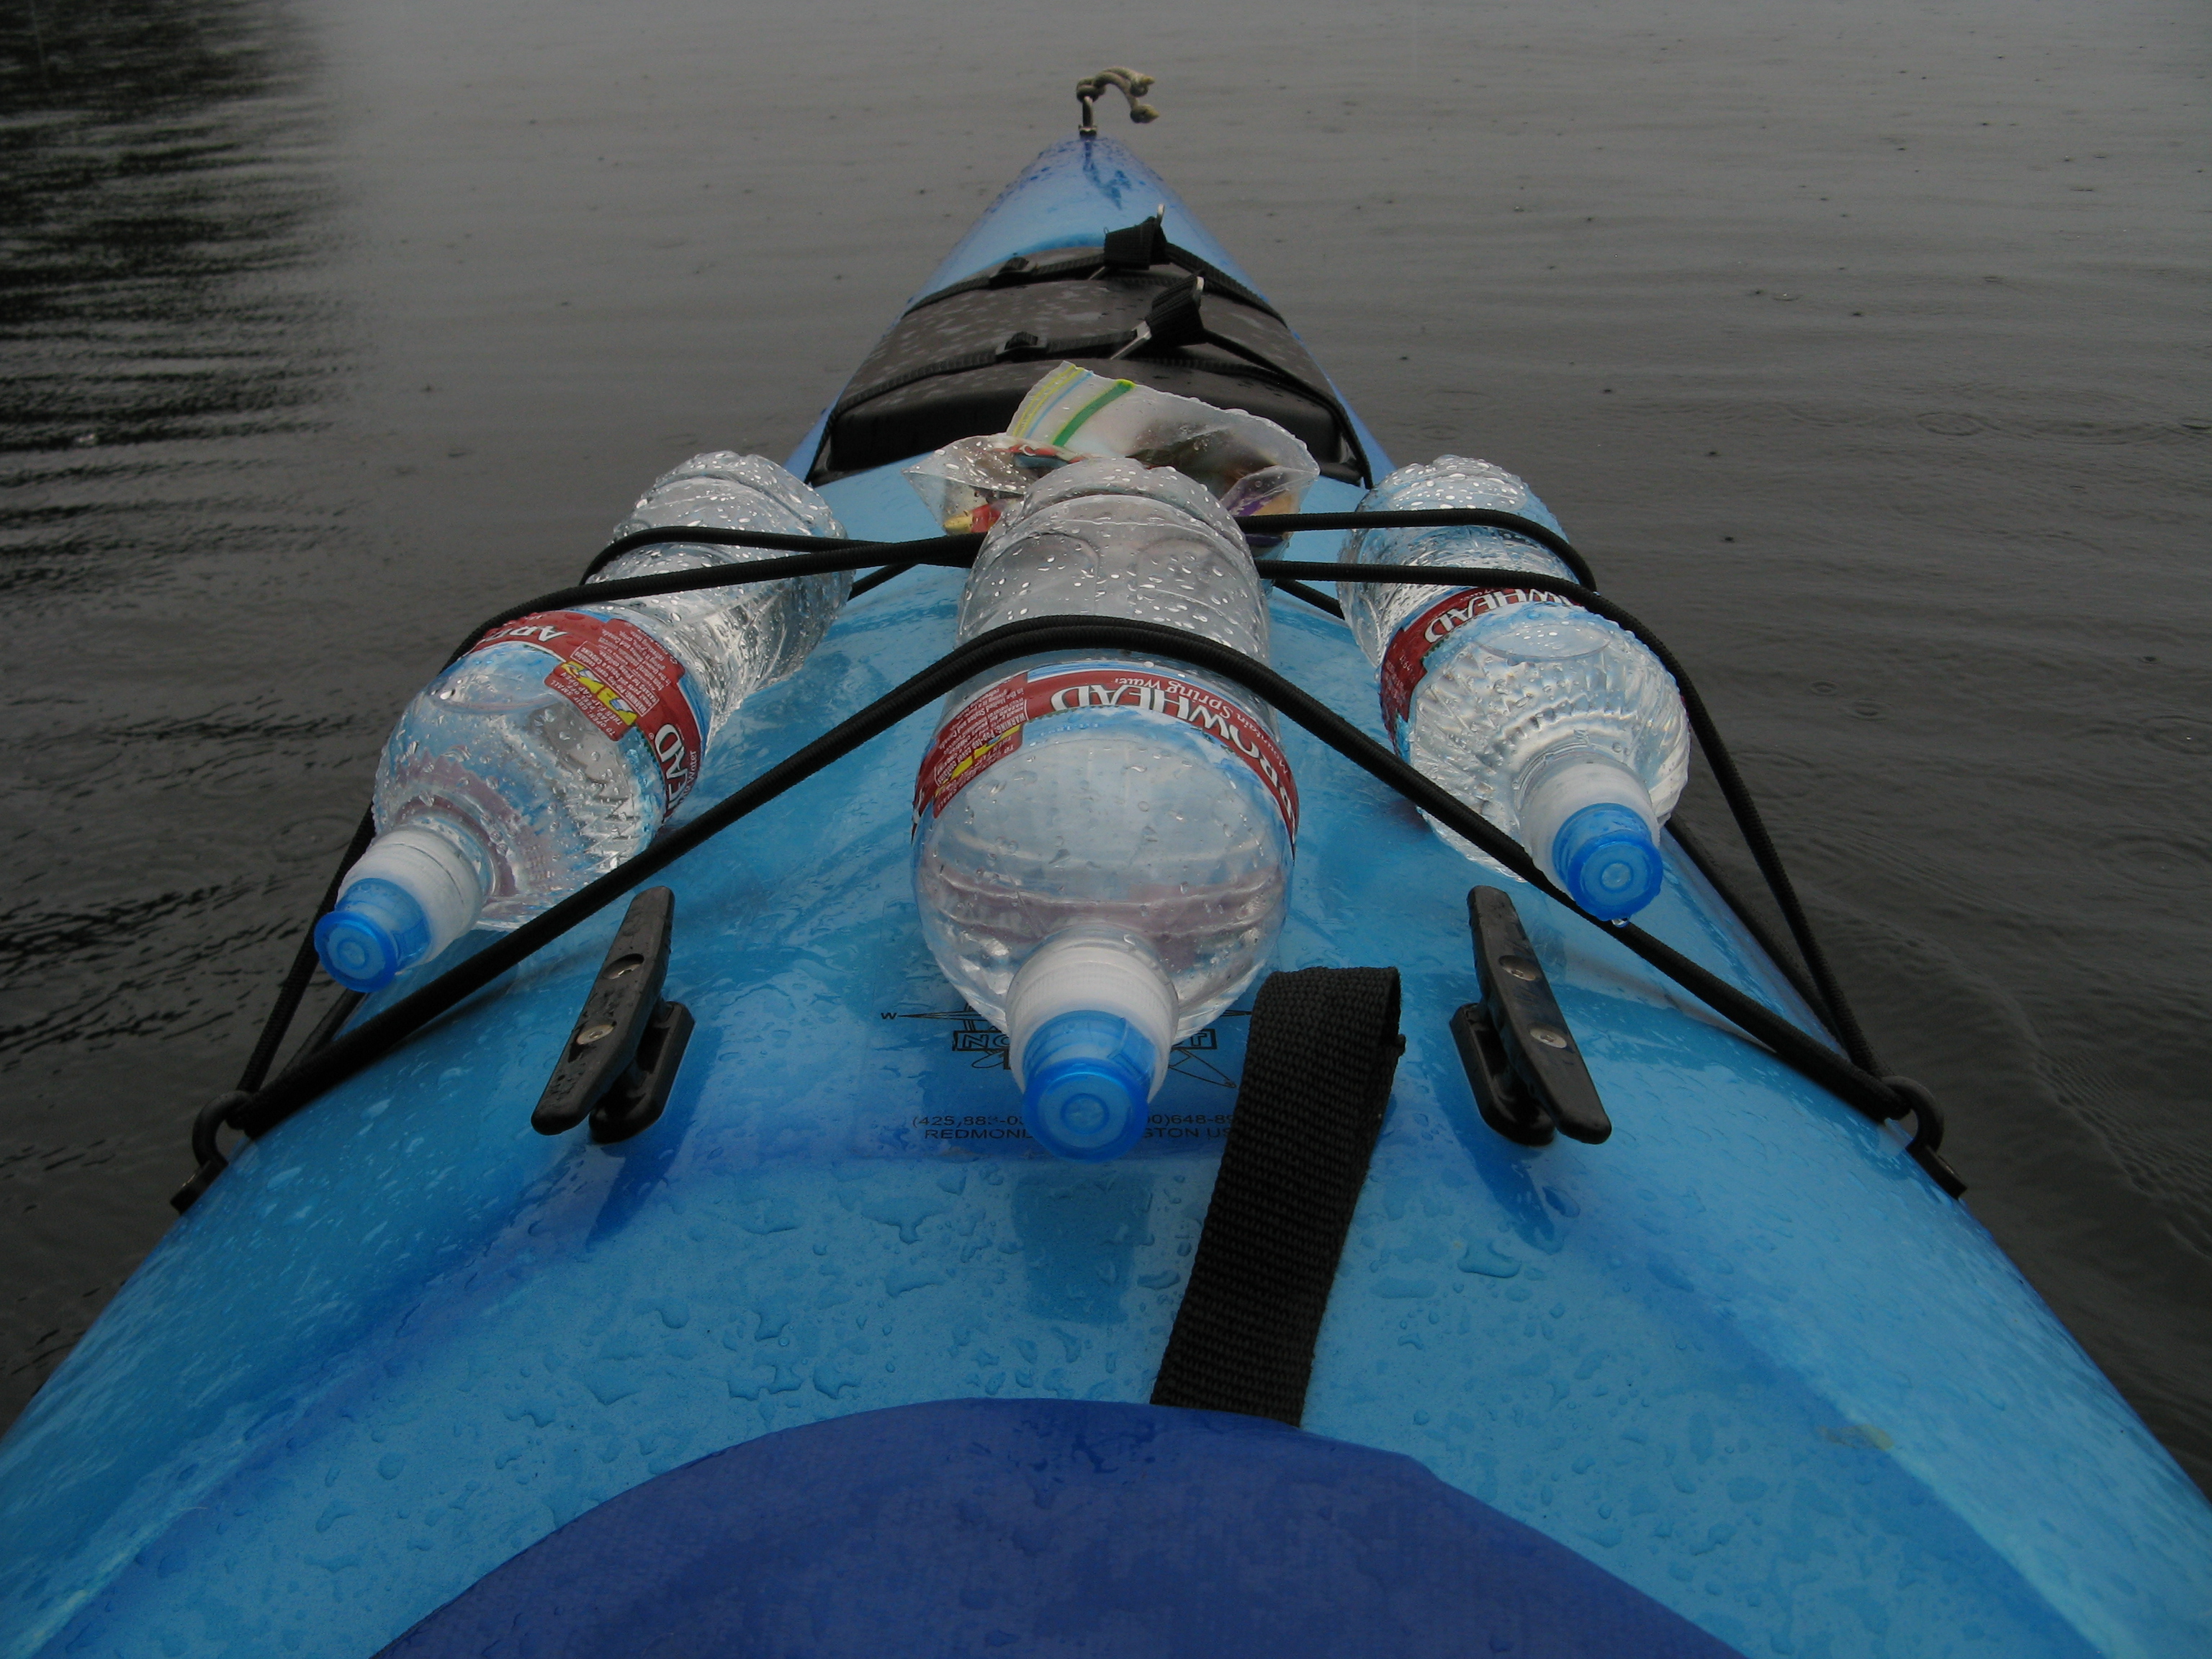 Kayak Front: Water x 3 and Gummi Bears